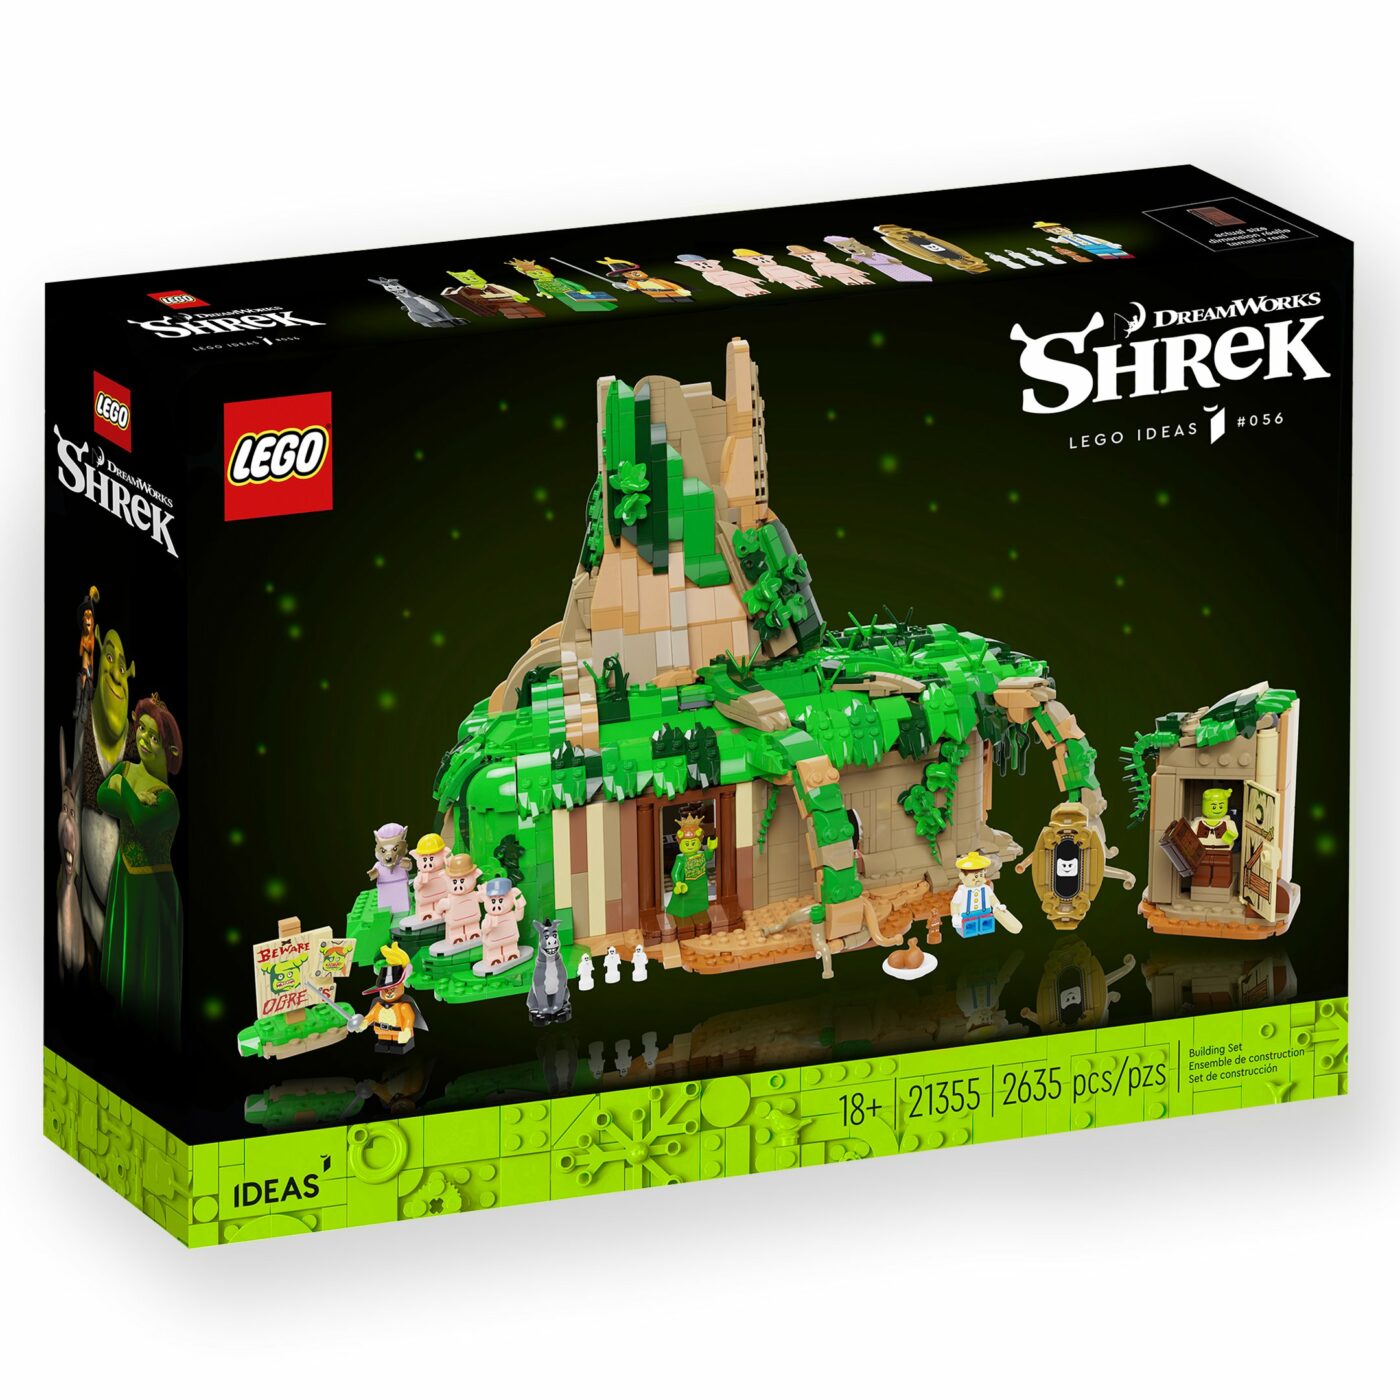 https://jaysbrickblog.com/wp-content/uploads/2023/01/LEGO-Ideas-Shrek-Box-Concept-1400x1400.jpg